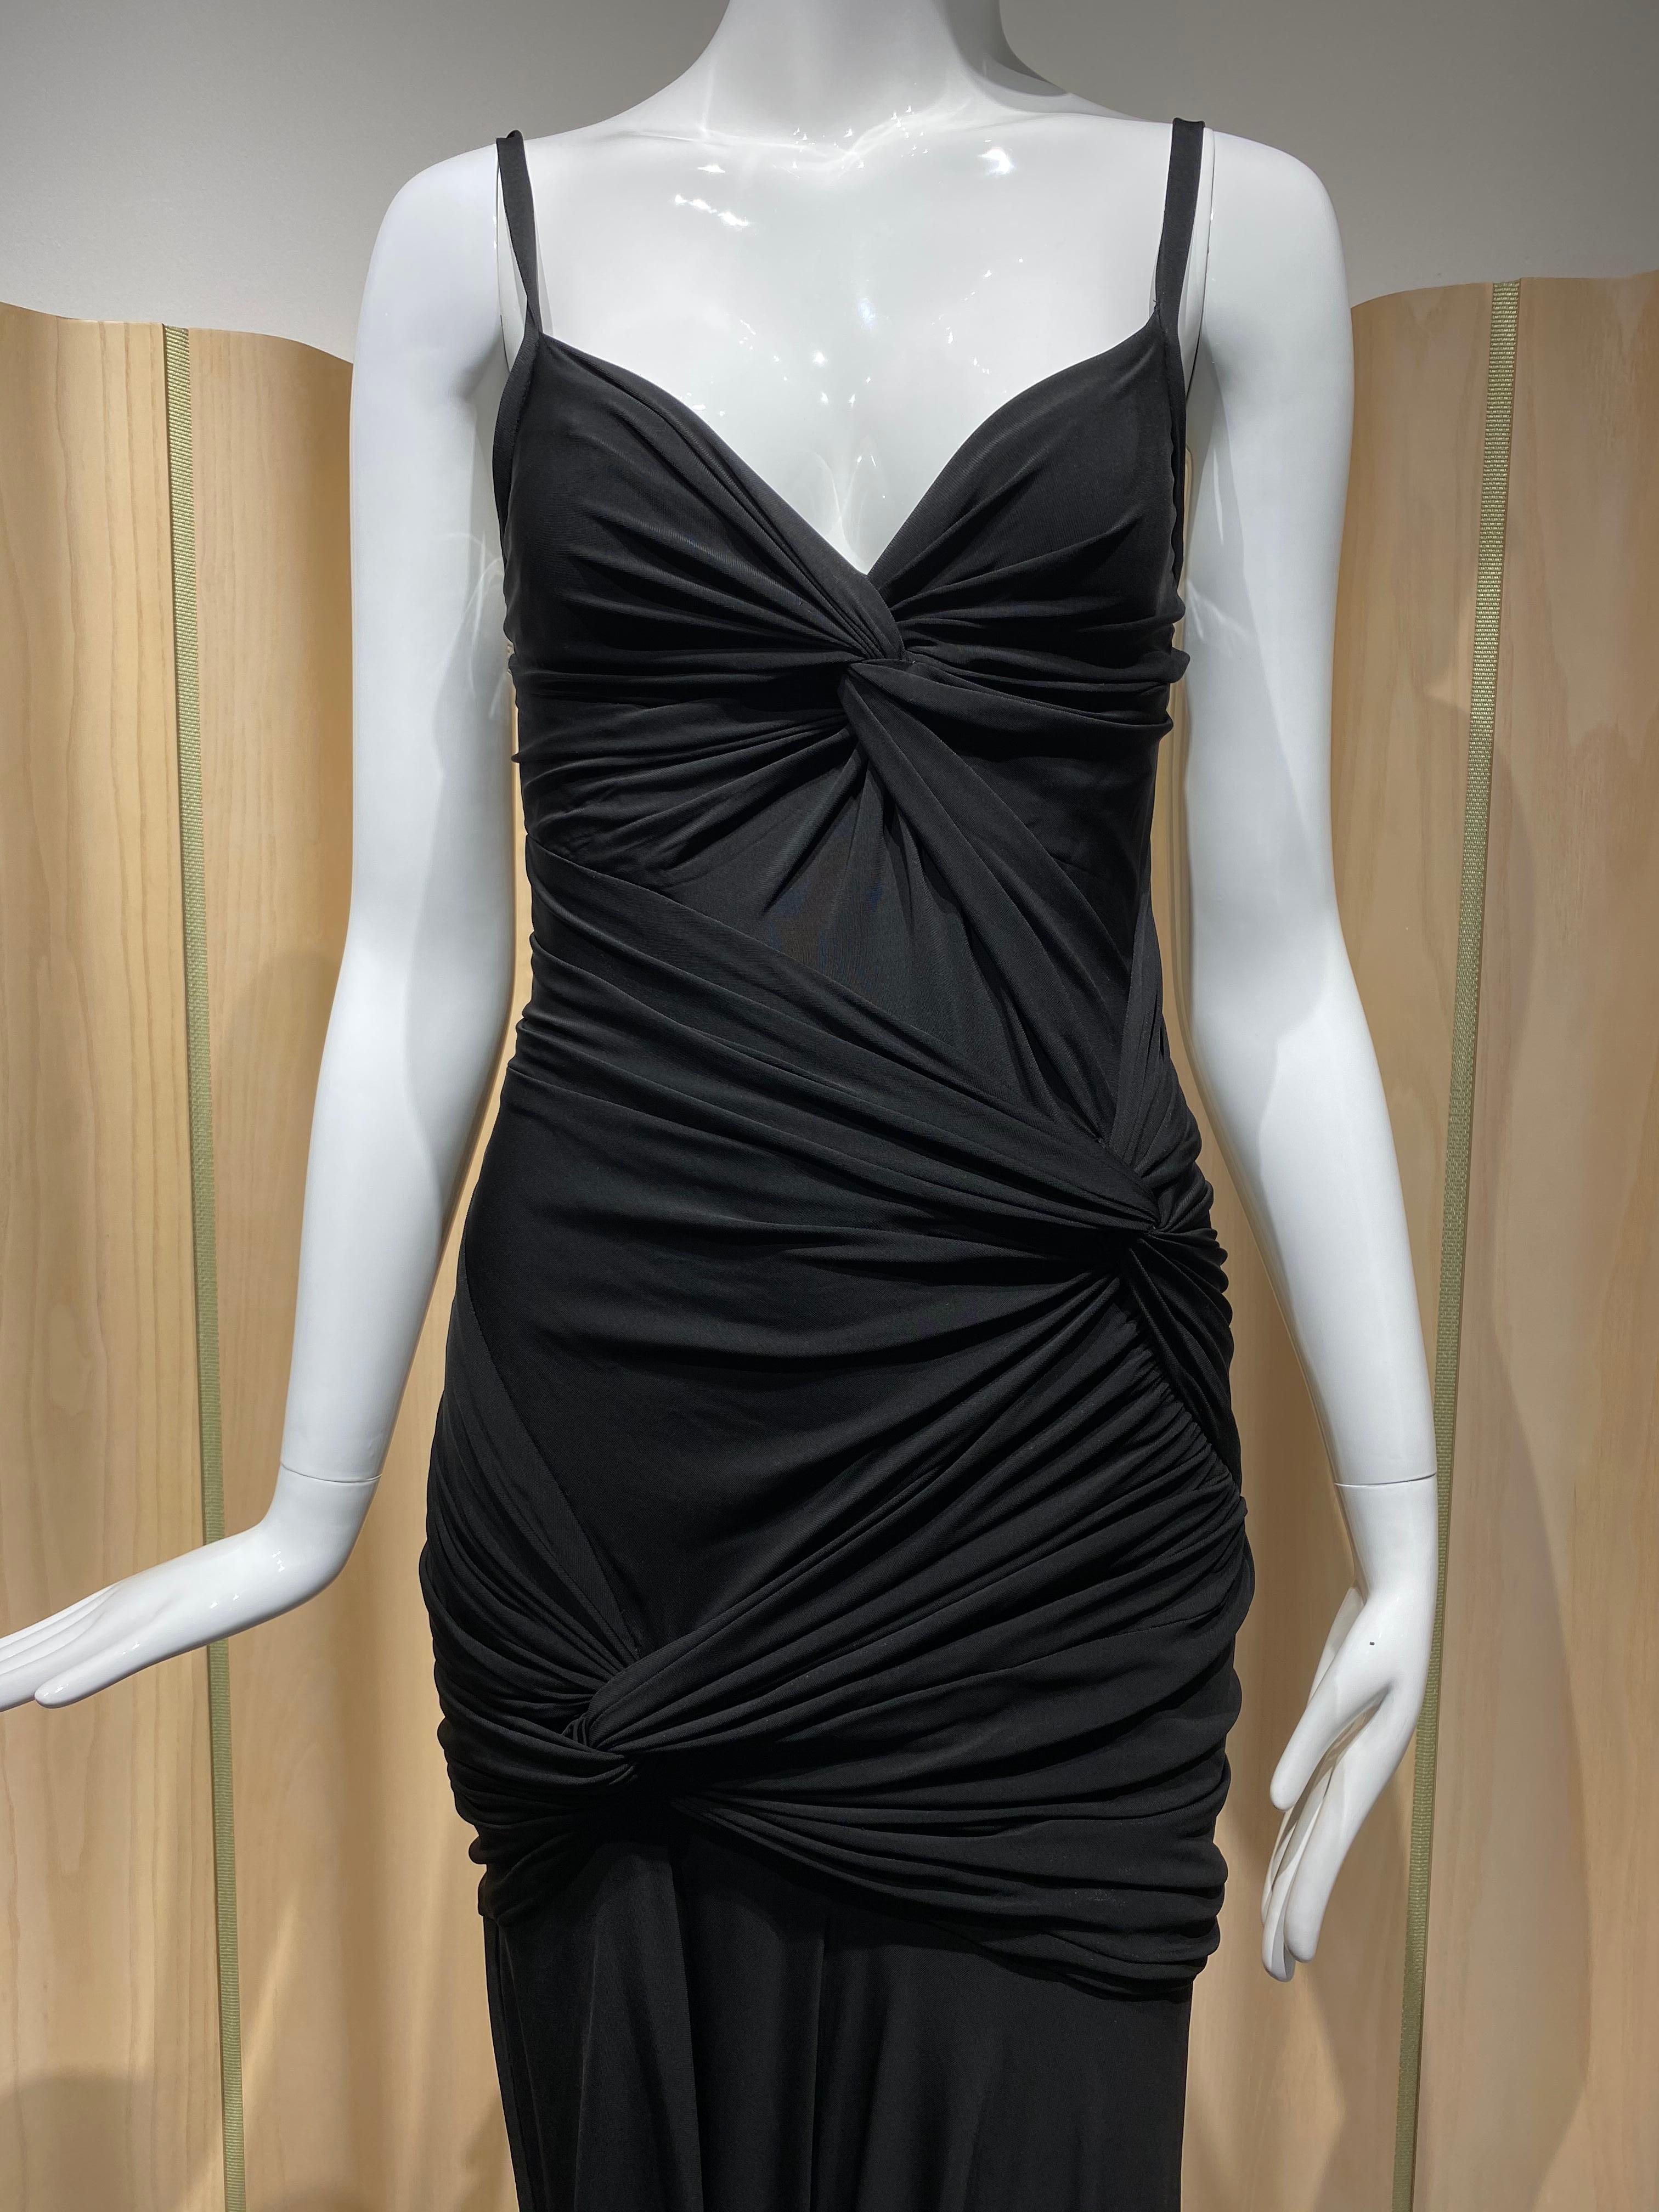 Sexy Donna Karan Black Label Jersey spaghetti straps form fitting cocktail dress.
Fit size 2/4